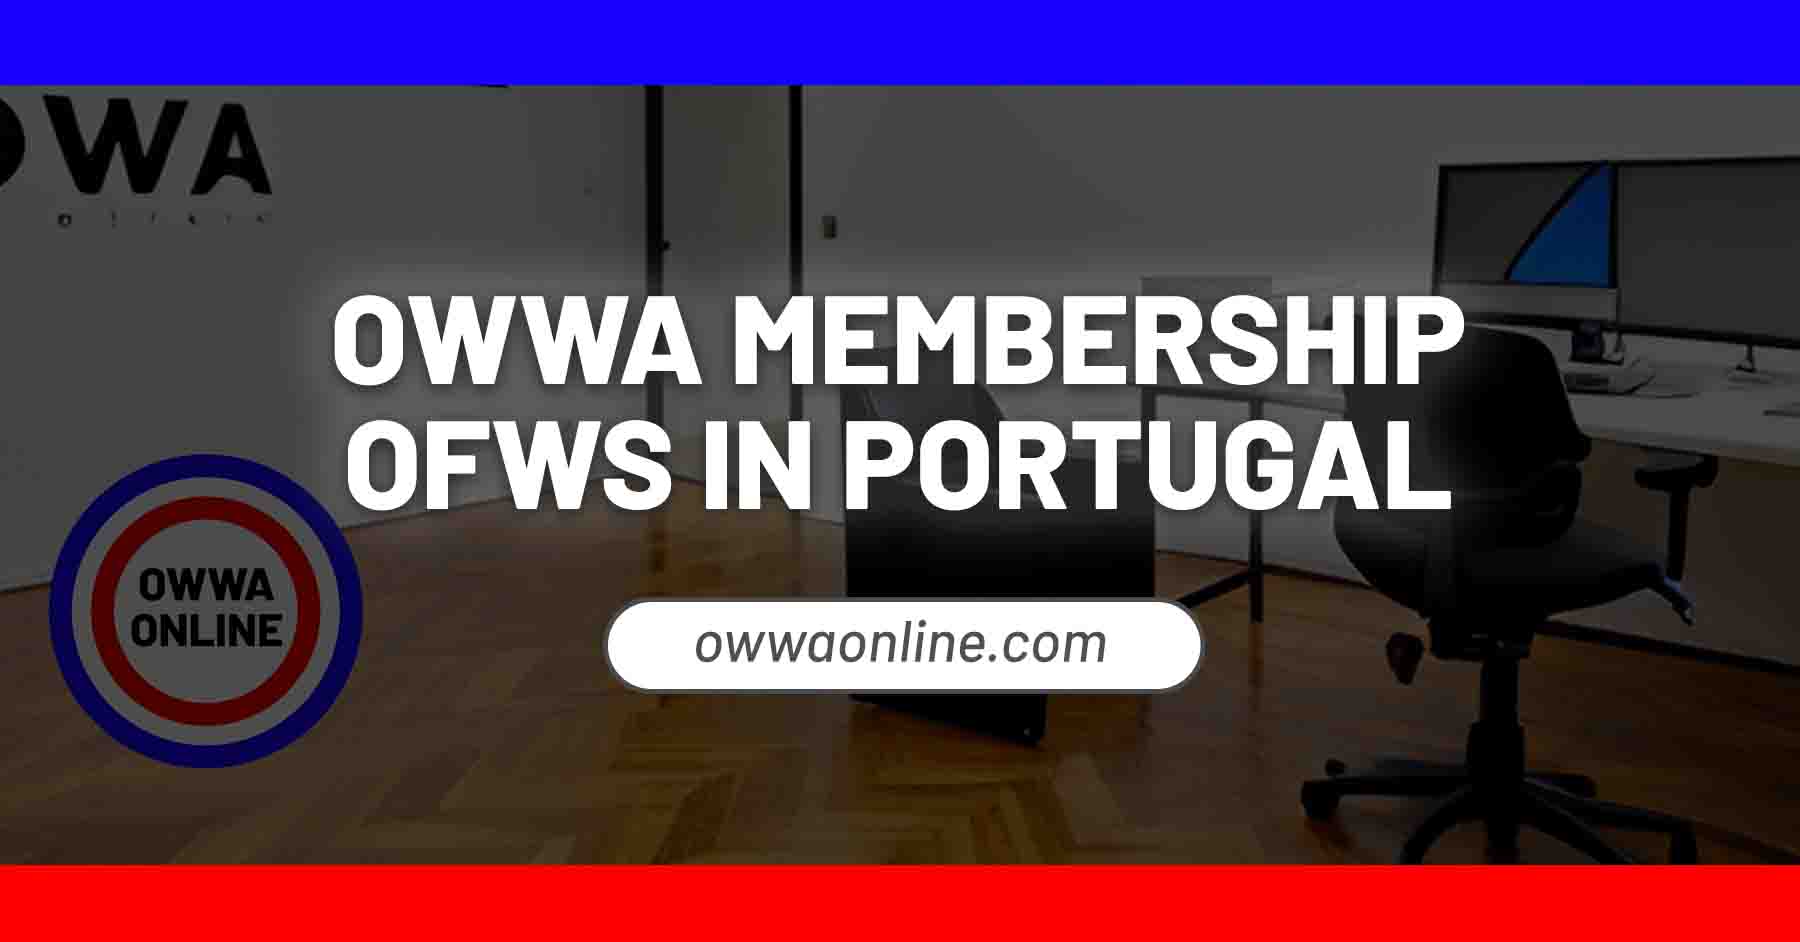 owwa membership application and renewal in portugal